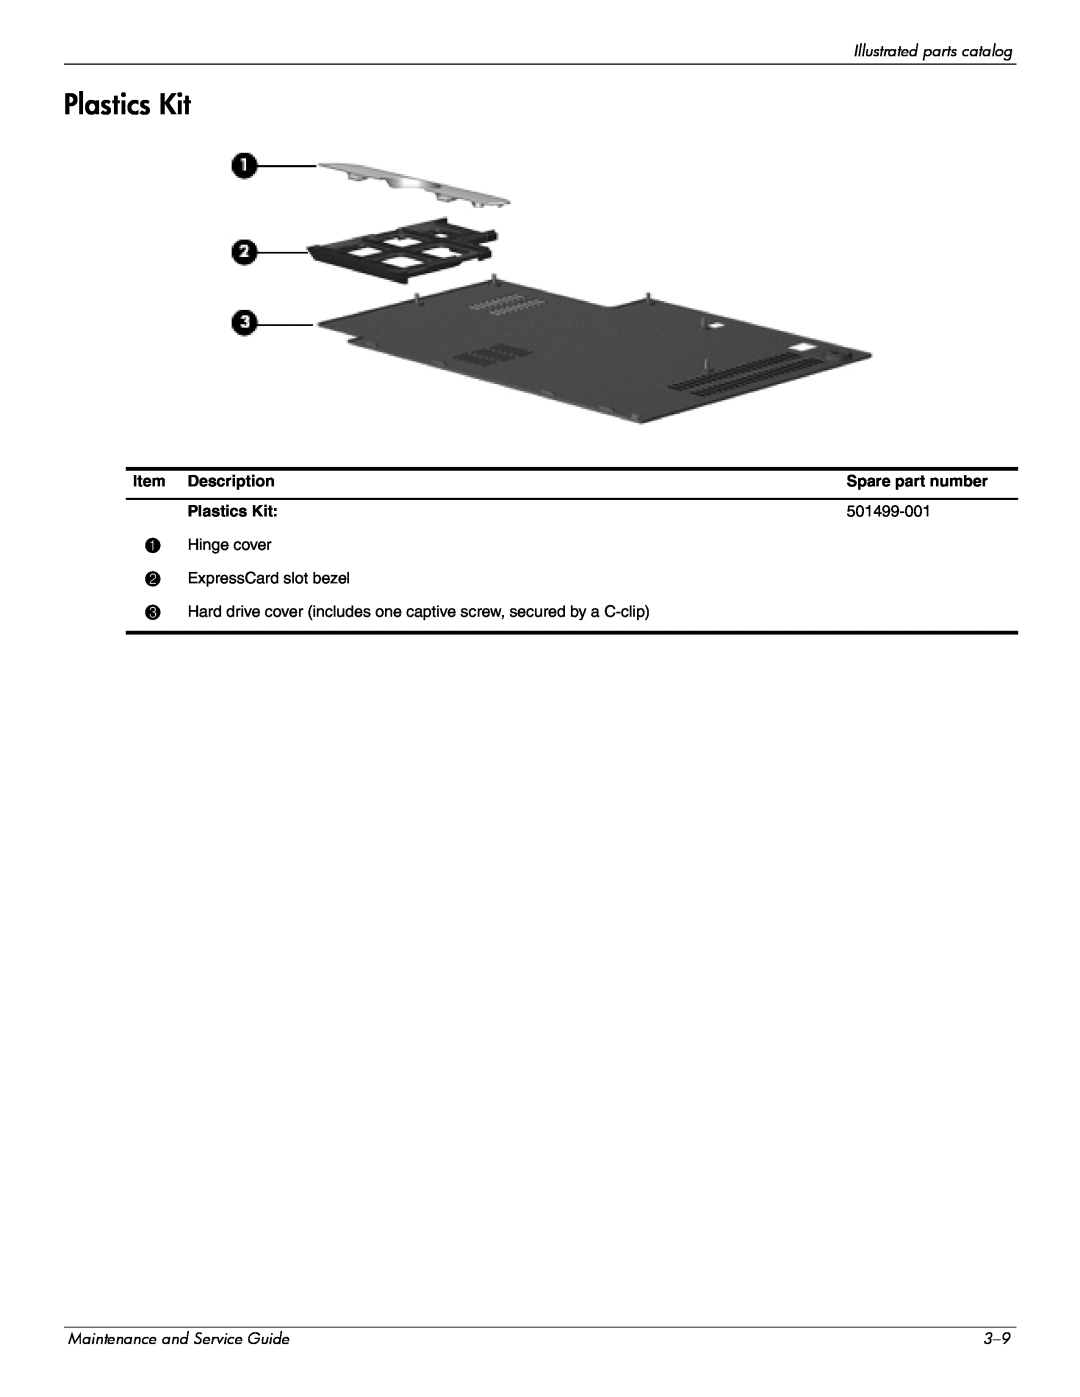 Hitachi 2730P manual Plastics Kit, Item, Description, Spare part number, 501499-001, Hinge cover 